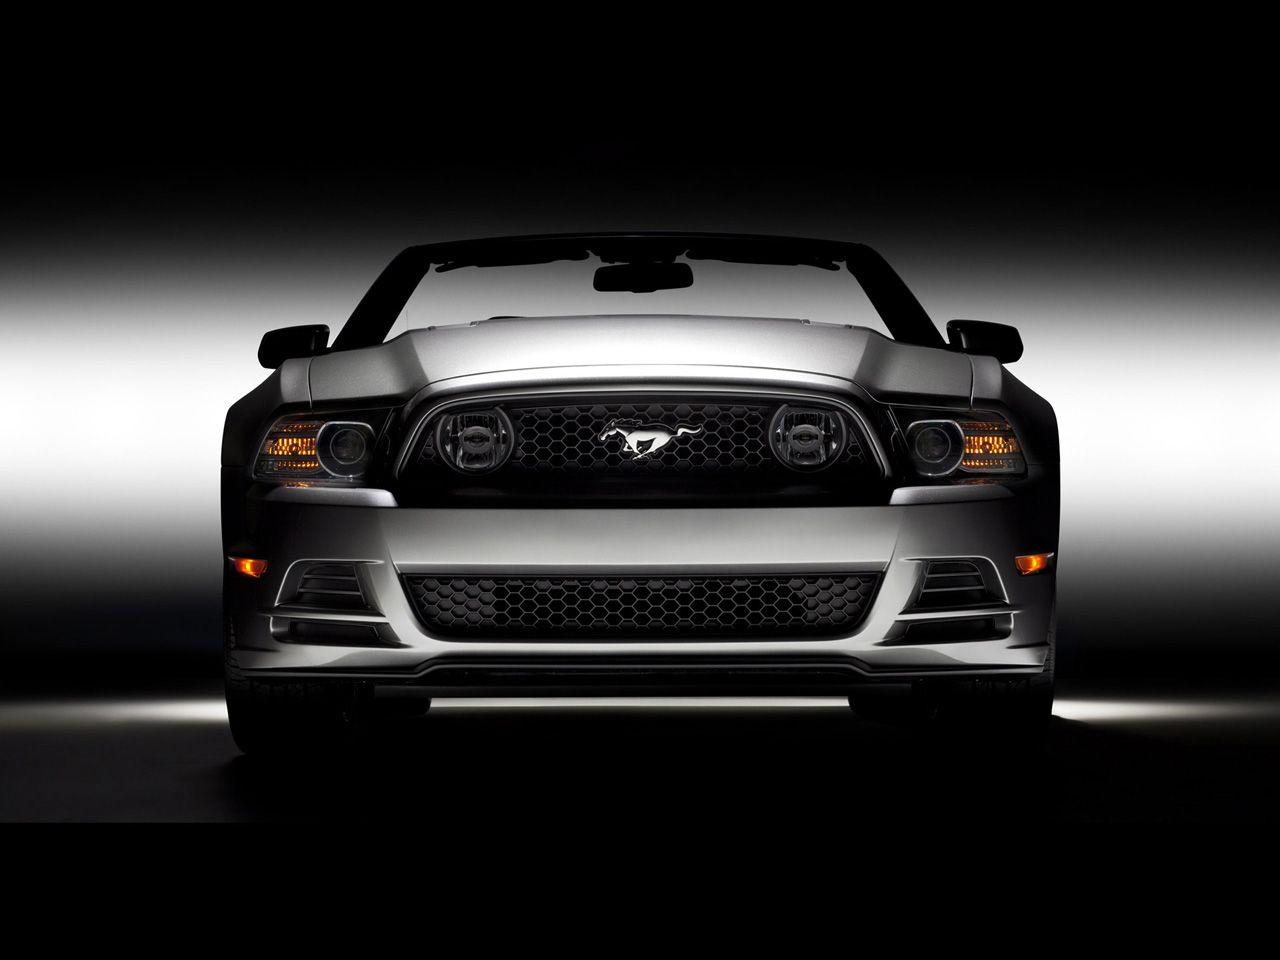 Ford Mustang Cobra Logo Wallpaper. Elegant Ford Mustang Shelby Cobra